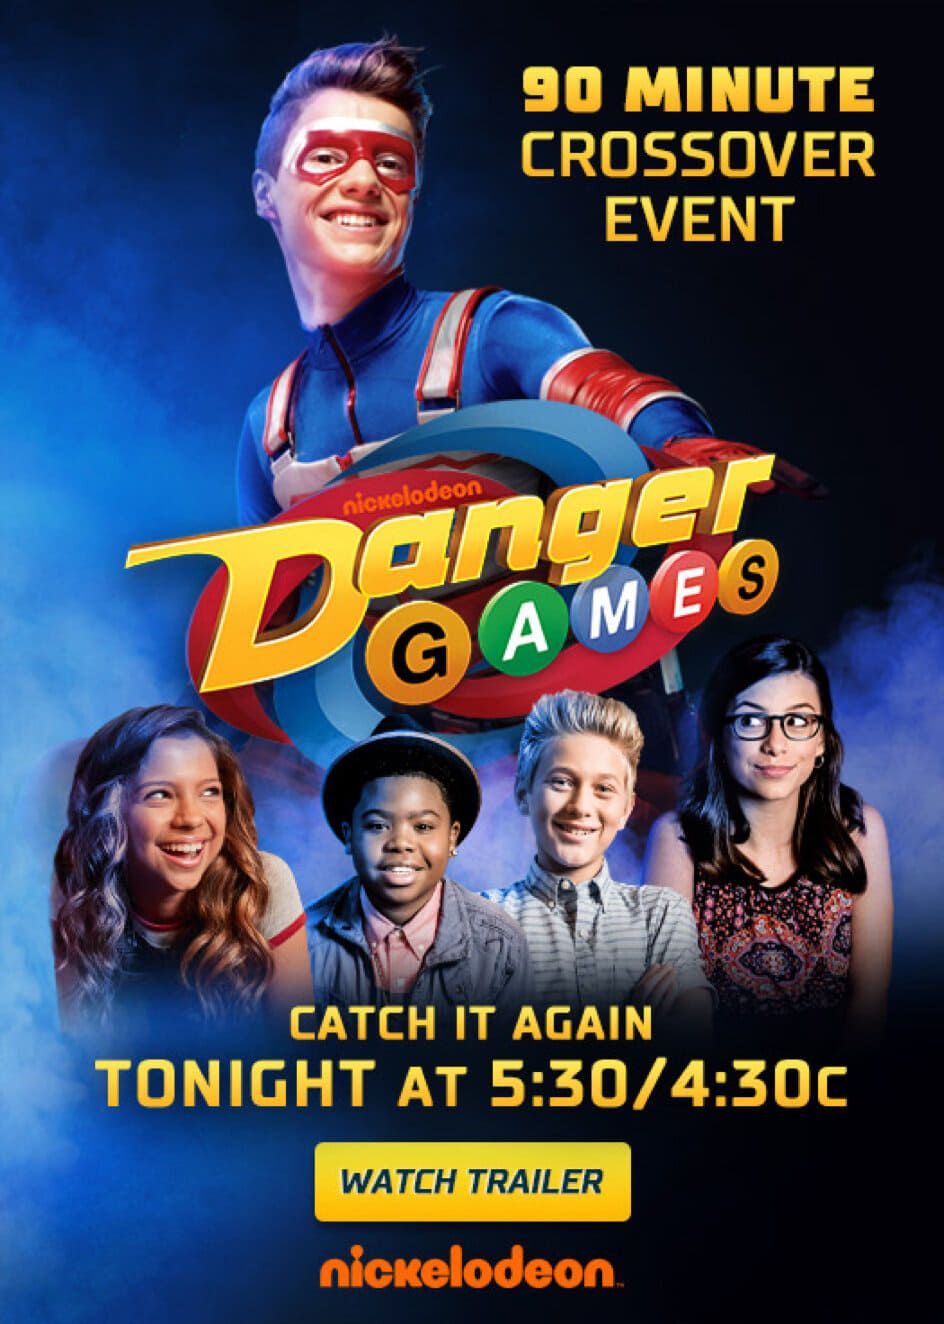 Danger Force Season 2 - watch full episodes streaming online